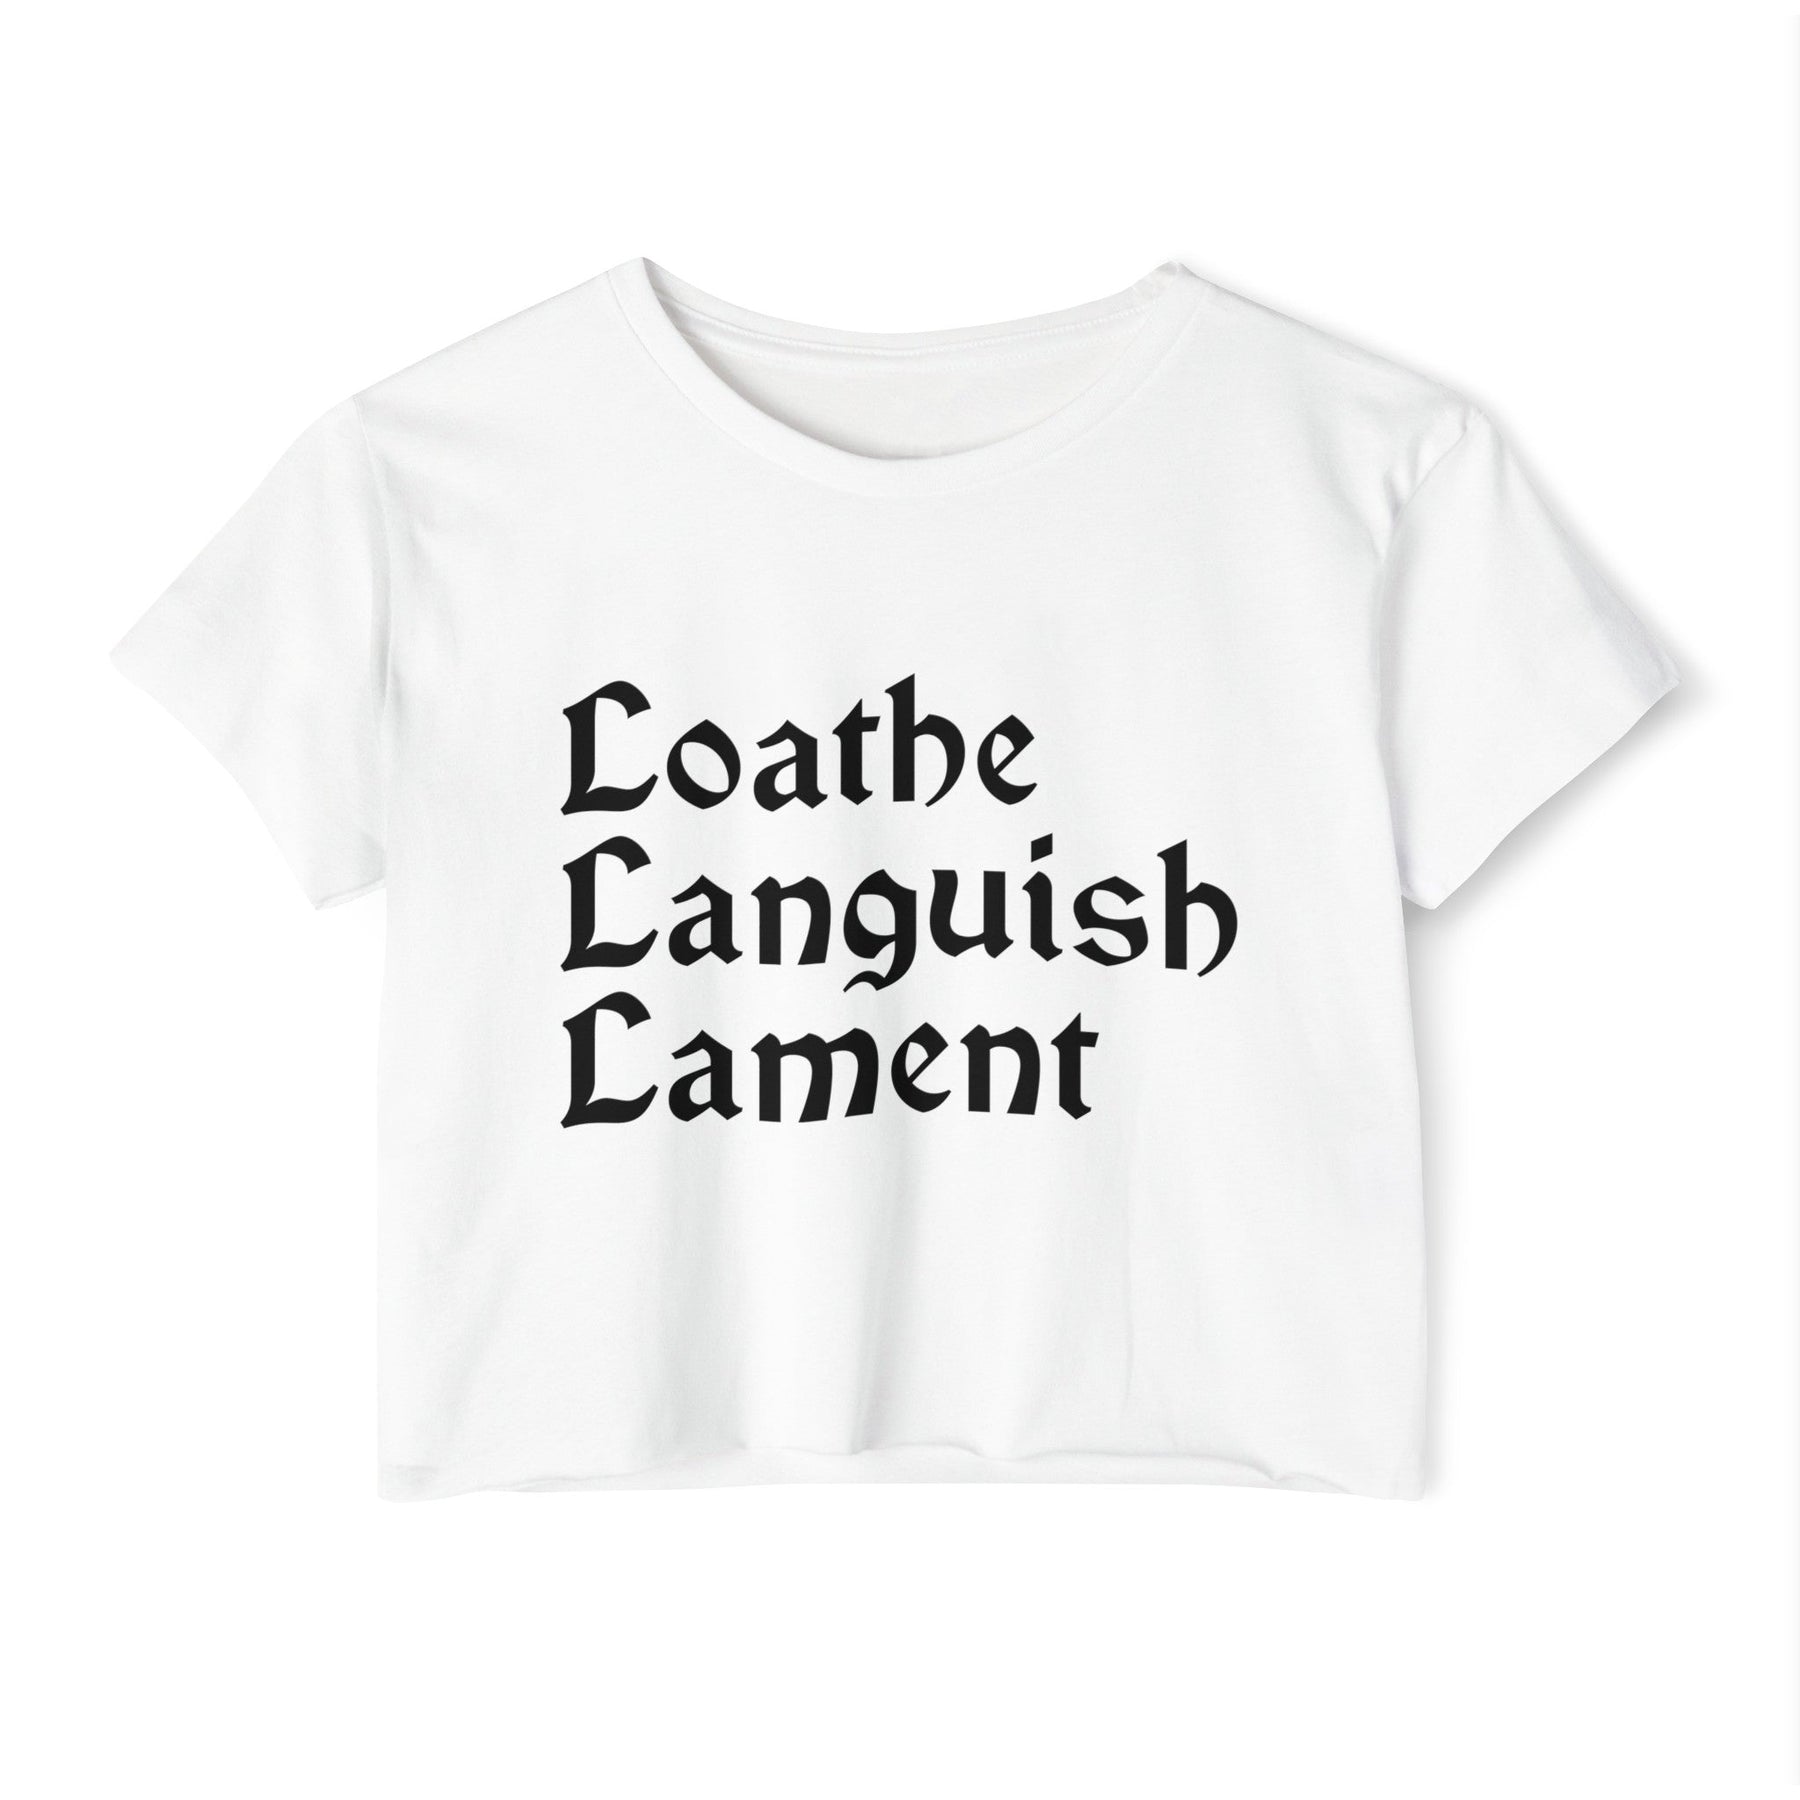 Loathe Languish Lament Stacked Women's Lightweight Crop Top - Goth Cloth Co.T - Shirt24504604112249675722